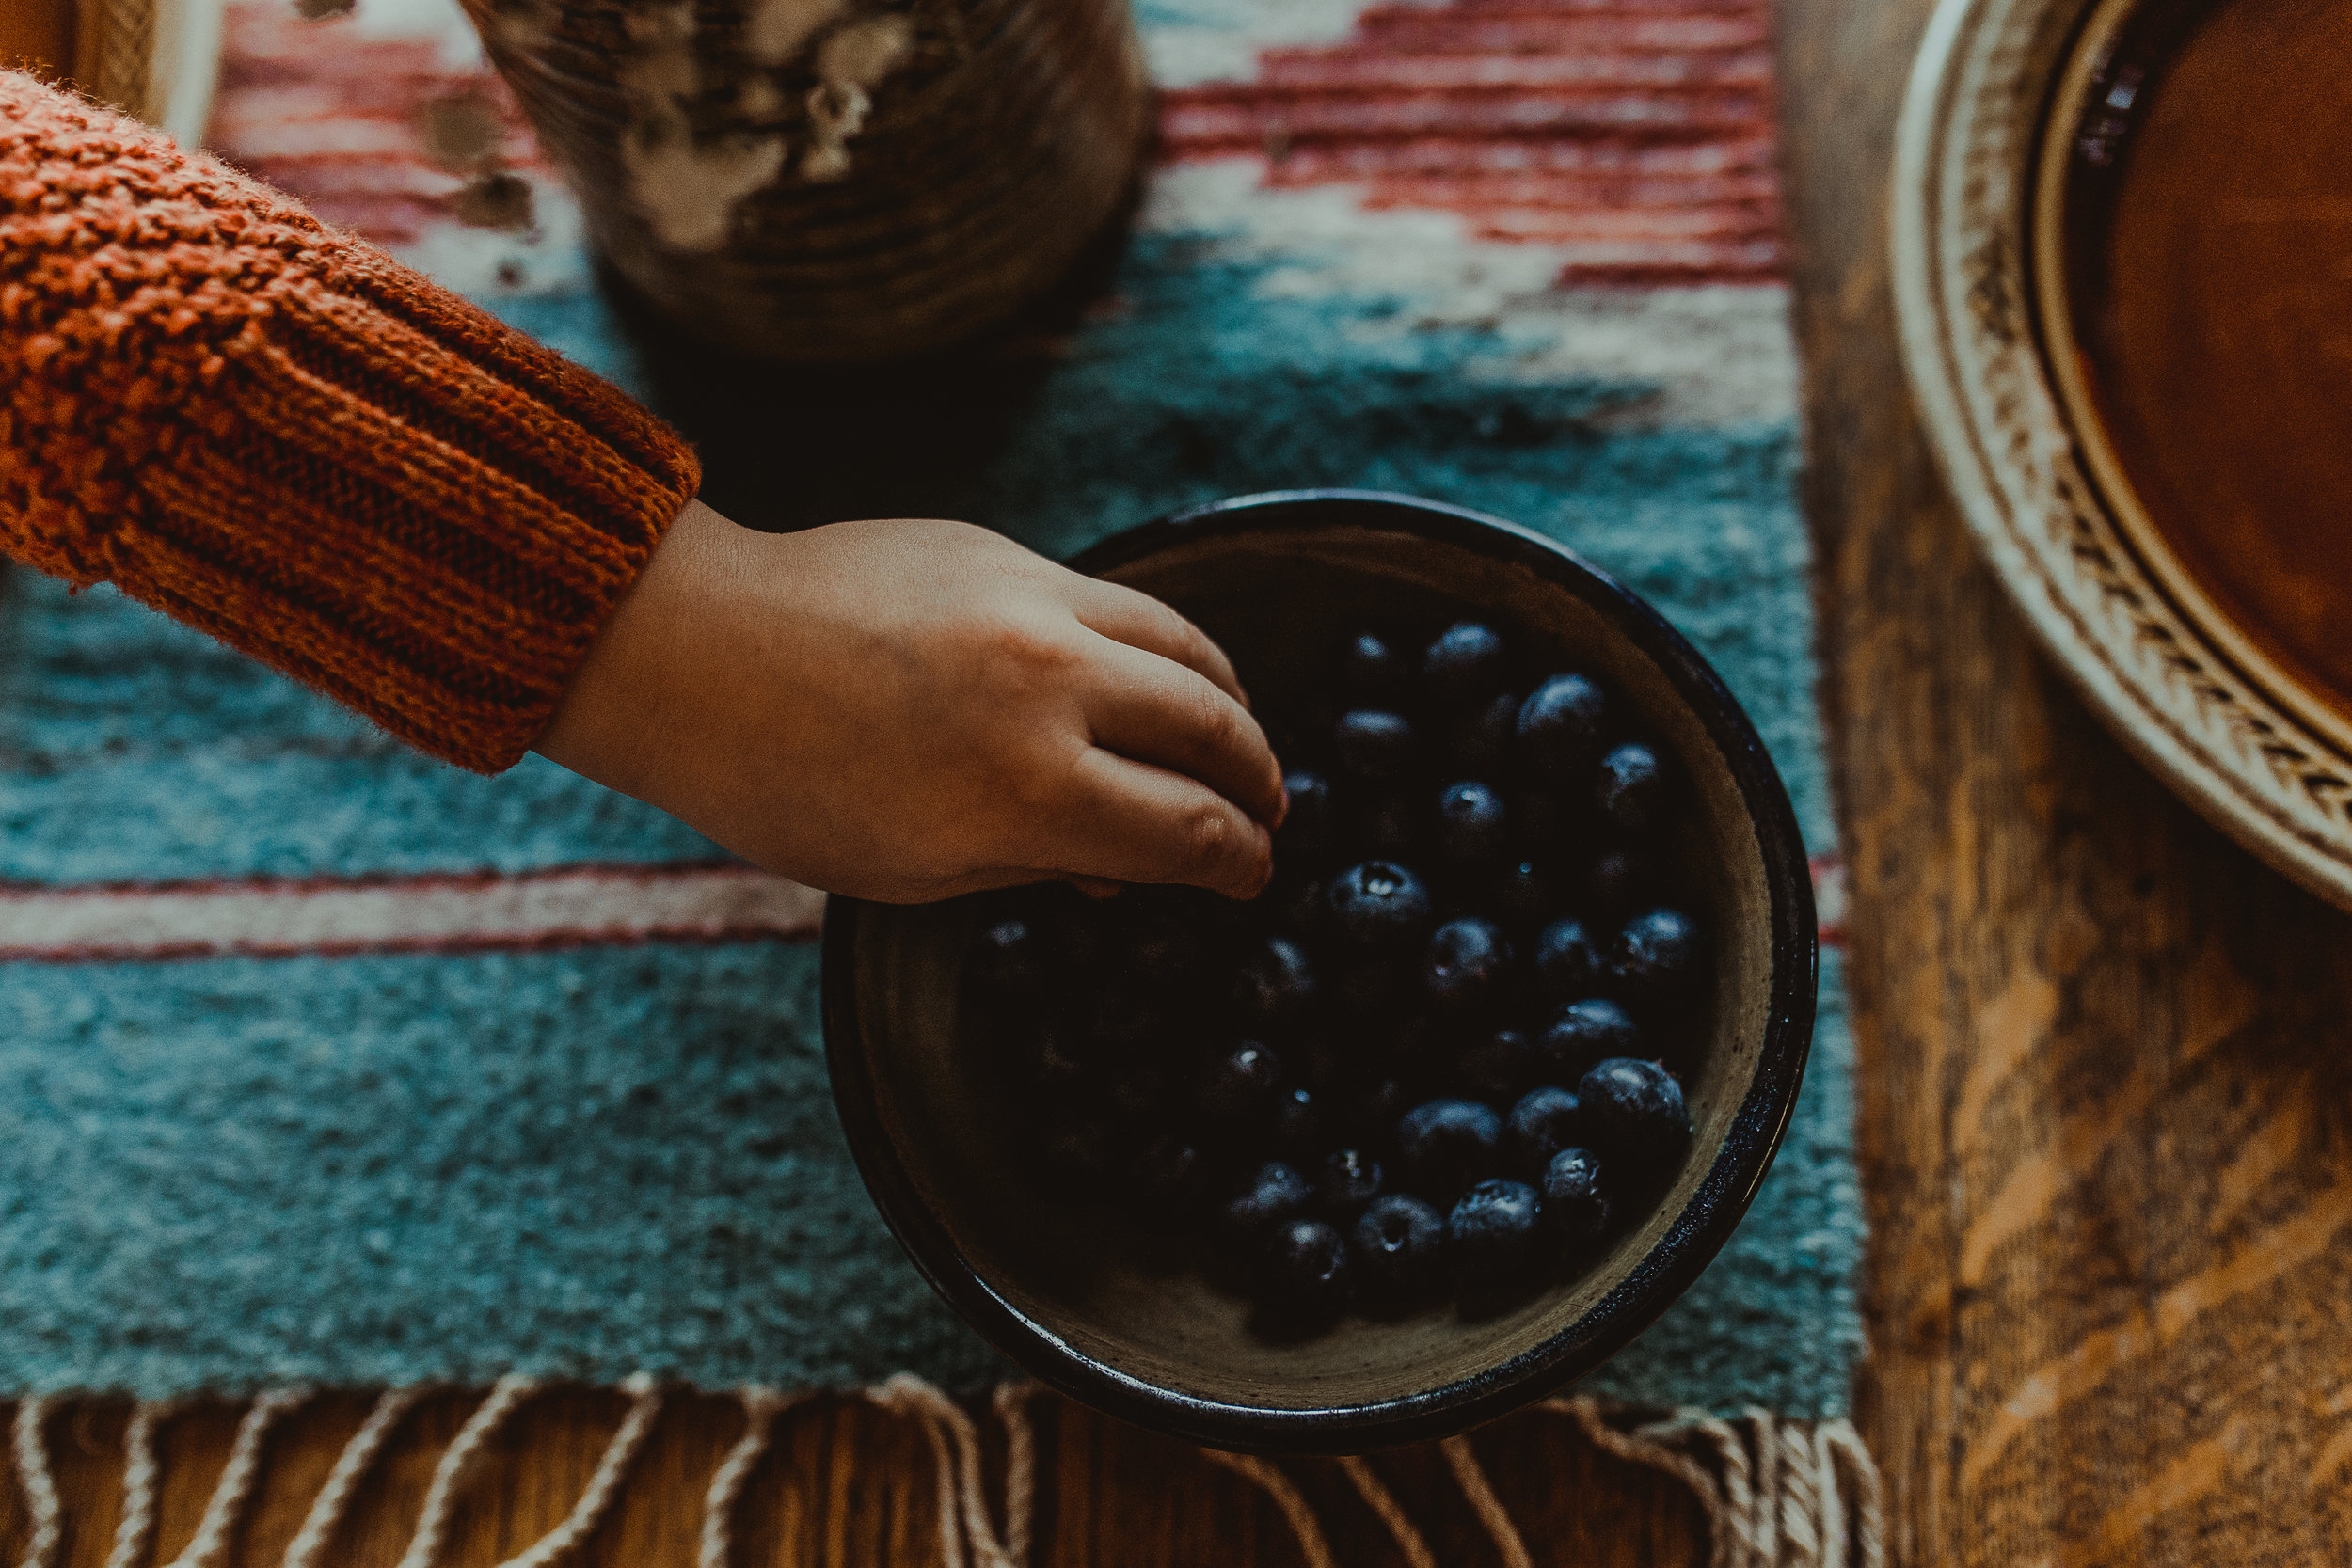  Toddler grabs blueberries in Ashland Oregon home 